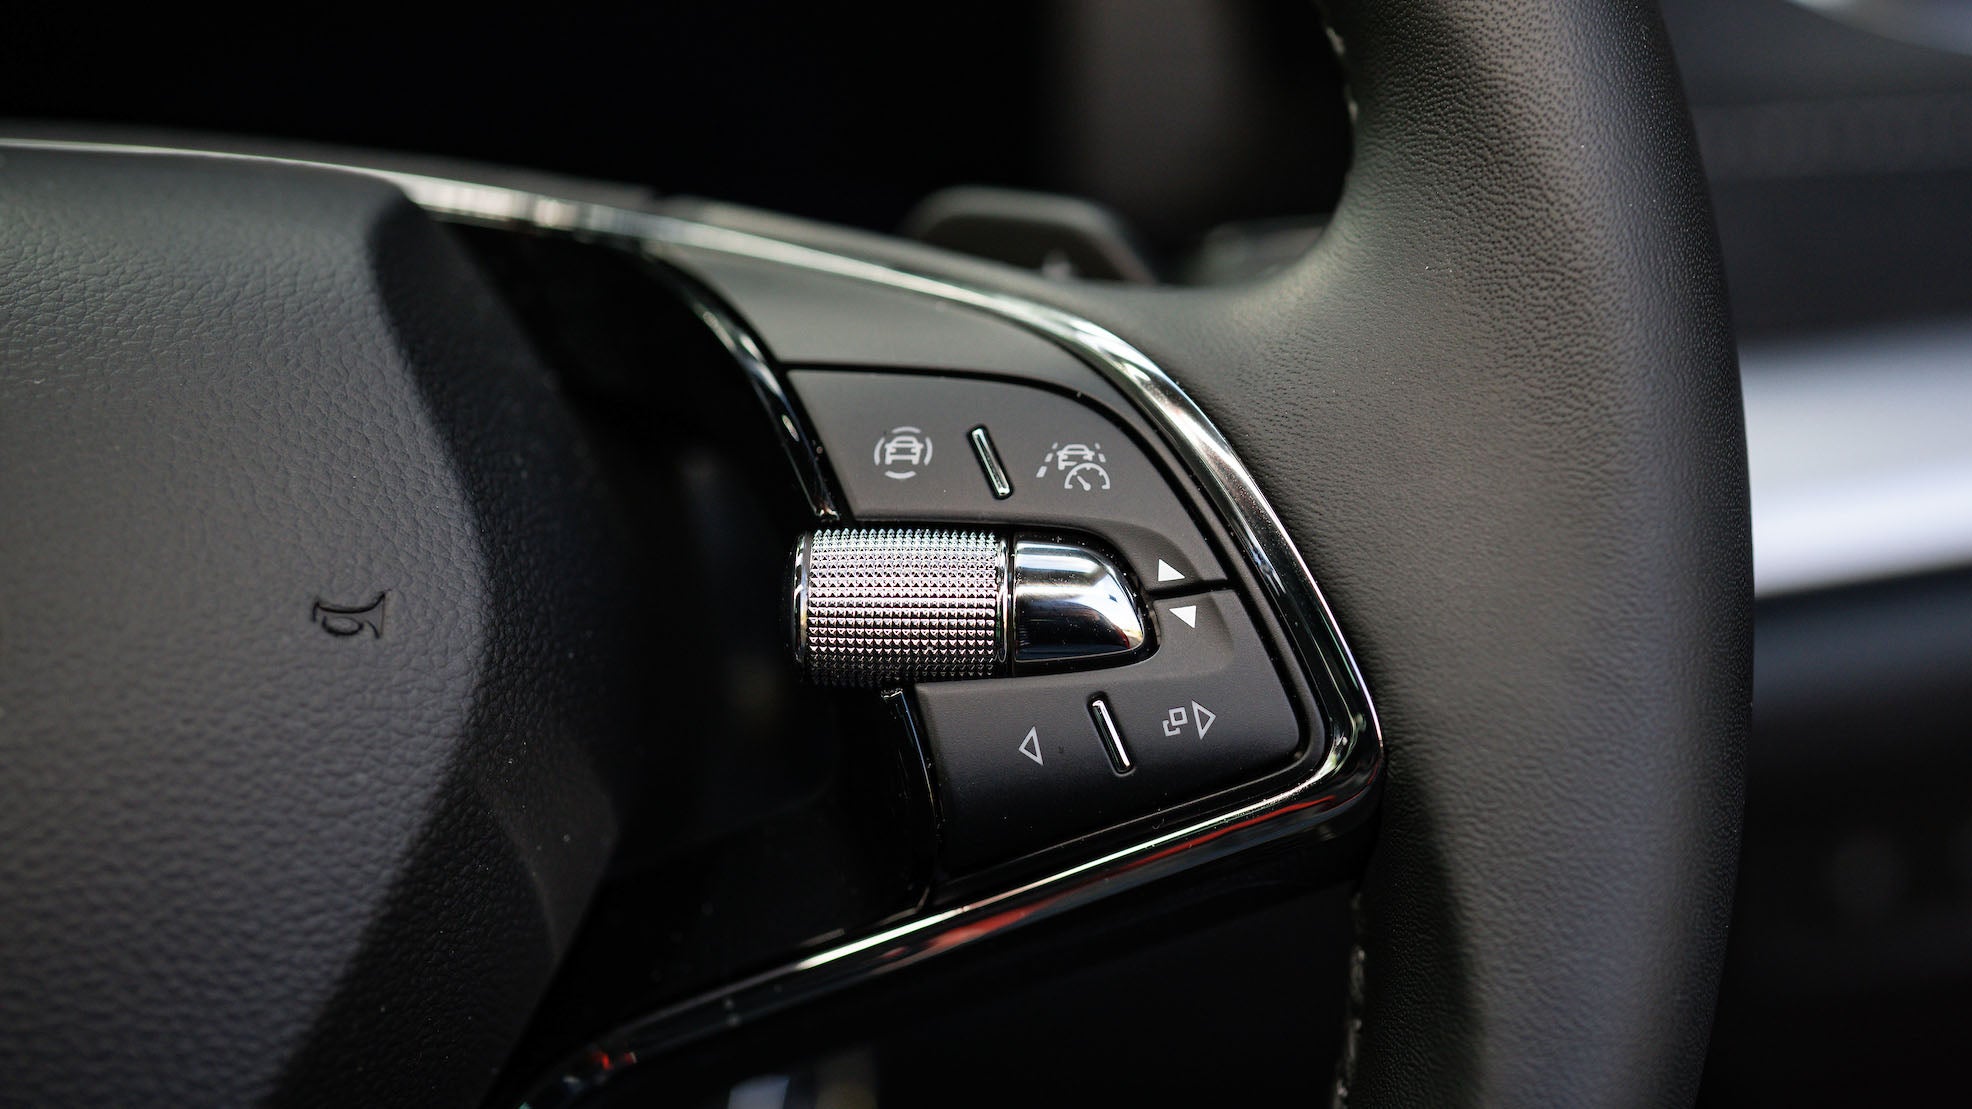 Skoda Octavia steering wheel controls